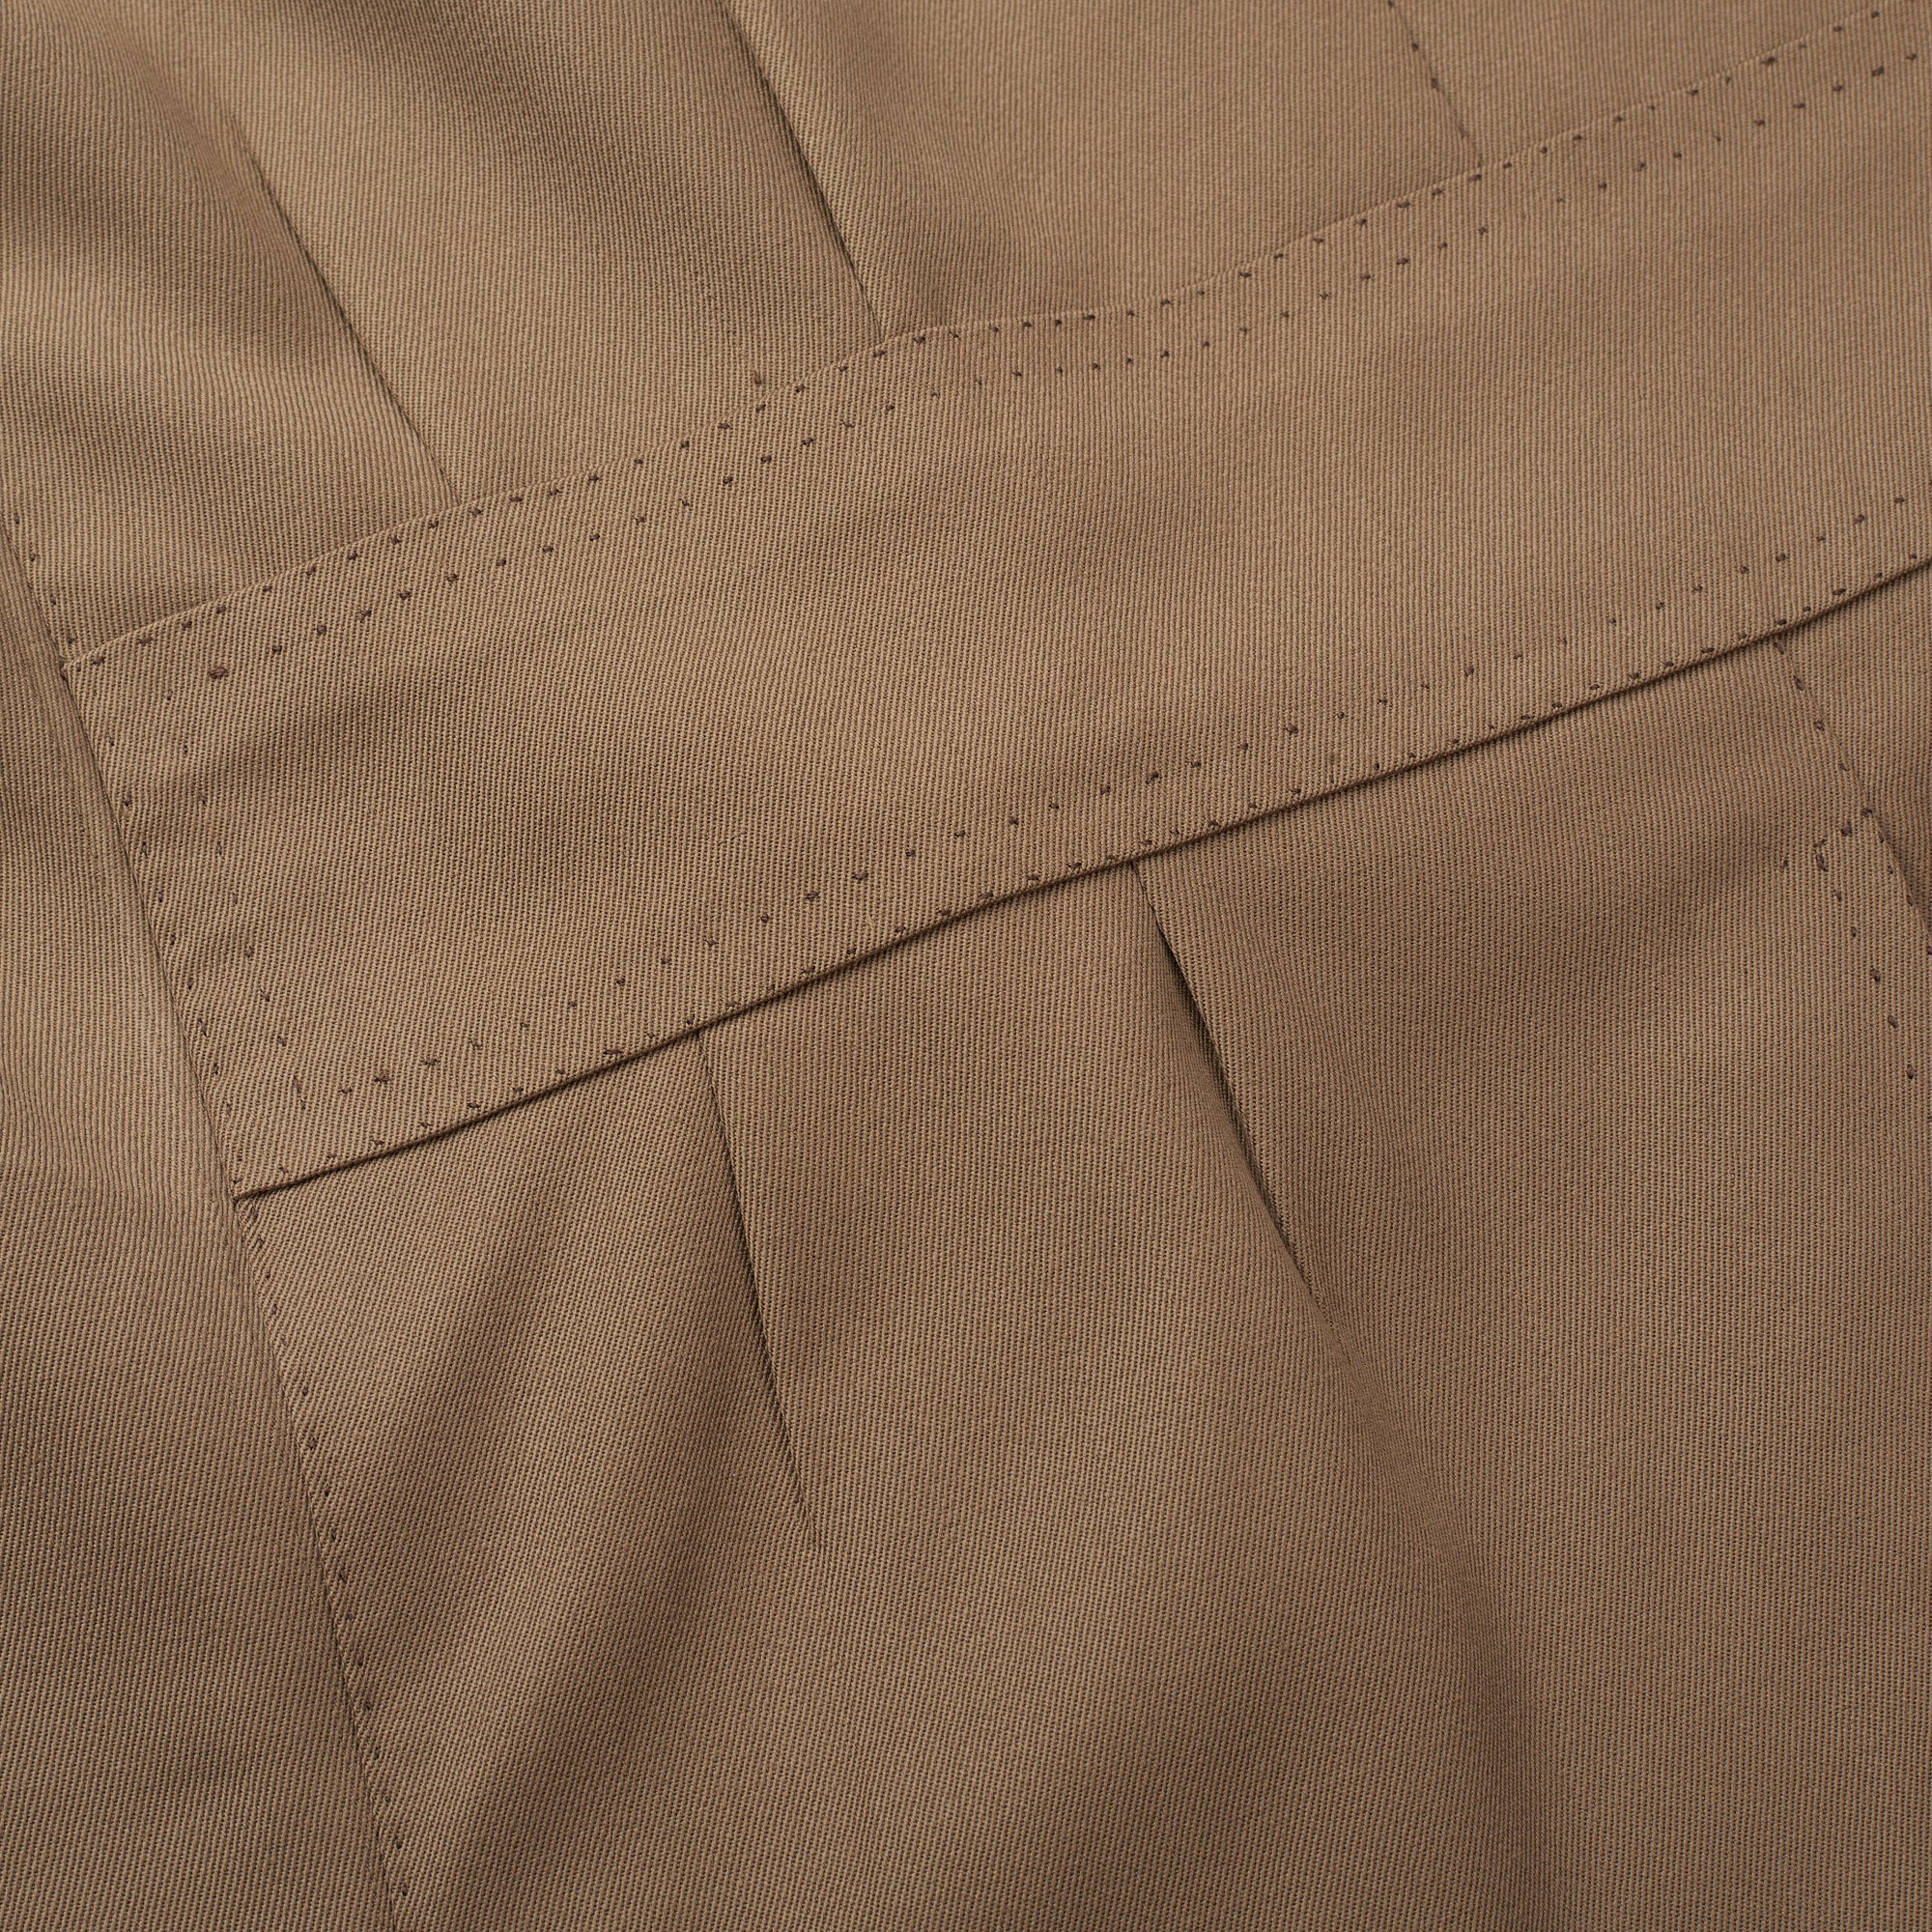 RUBINACCI LH Handmade Bespoke Olive Wool-Cotton Back Belted Jacket EU 50 NEW US 40 RUBINACCI